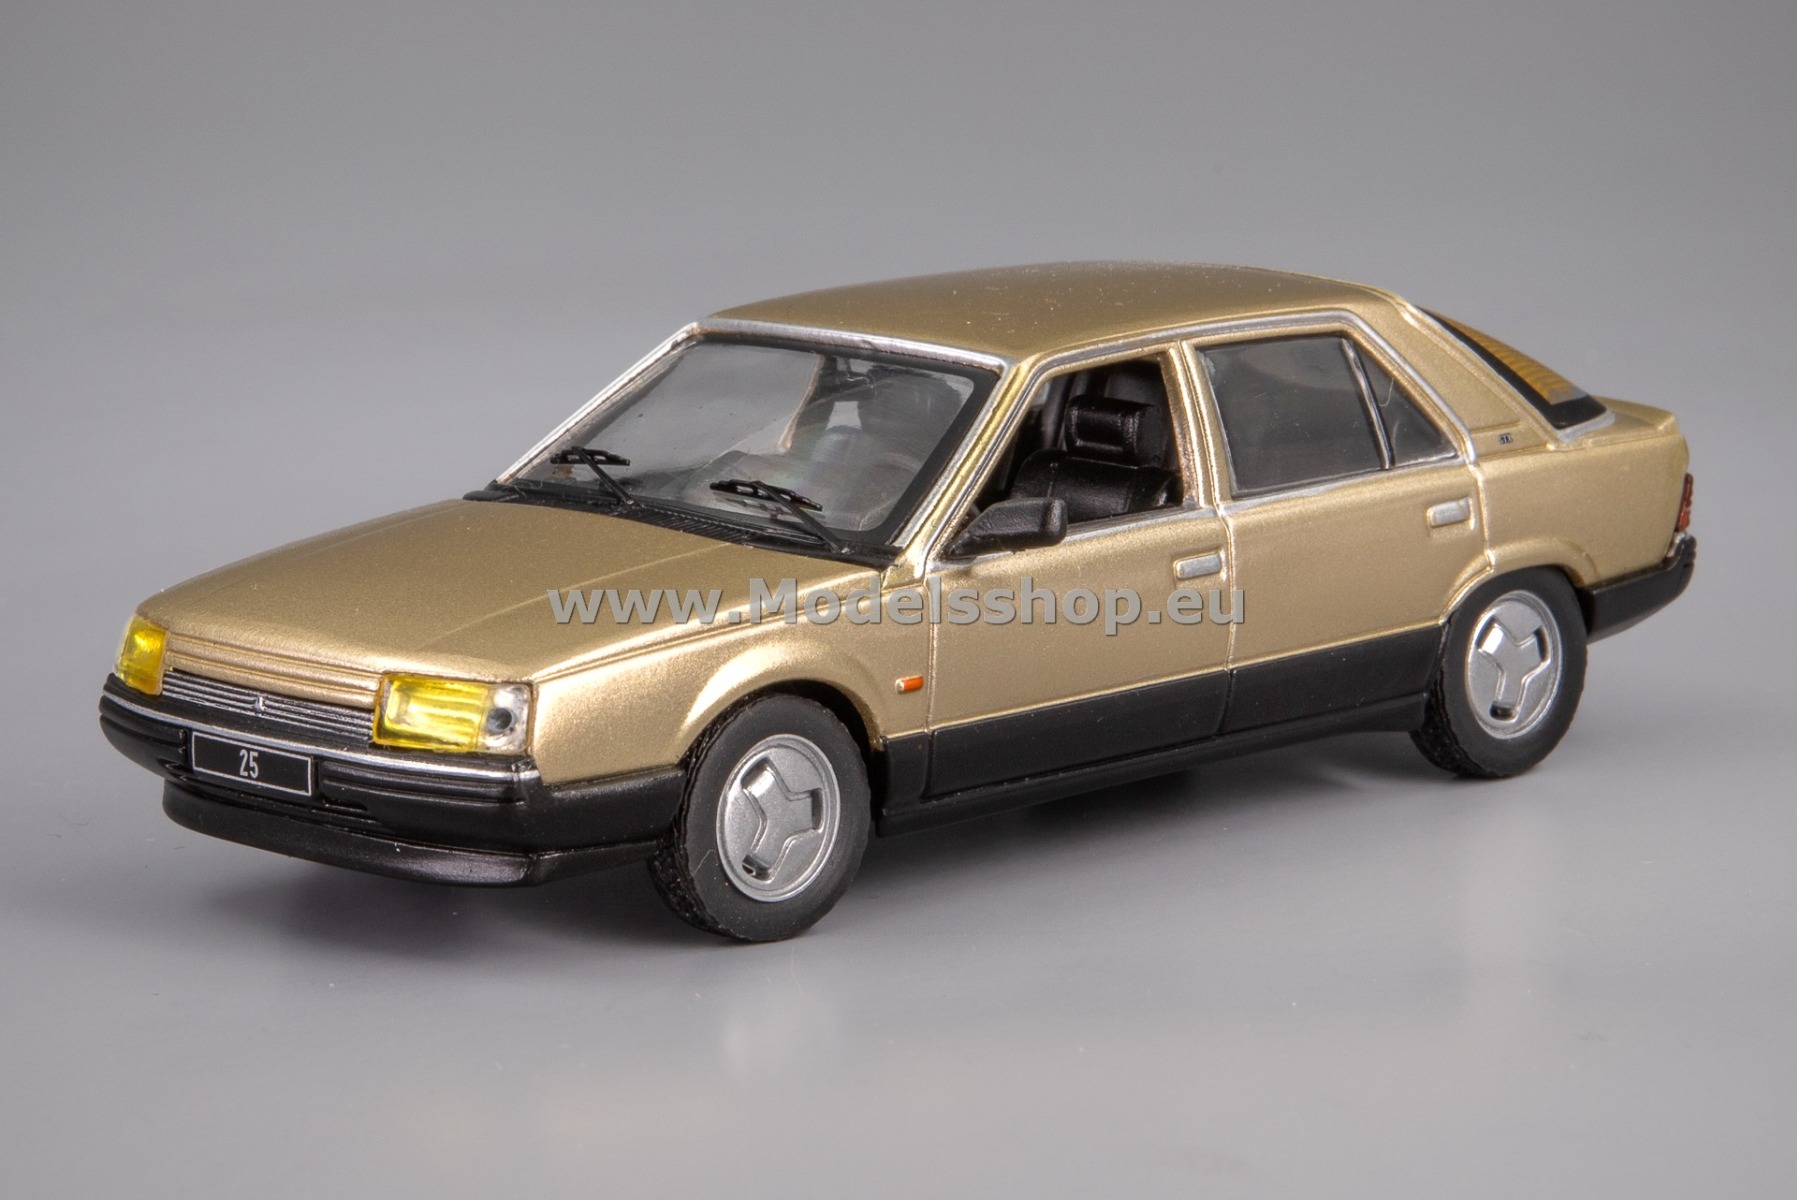 IXOCLC539N.22 Renault 25 MK 1, 1986 /beige - metallic/